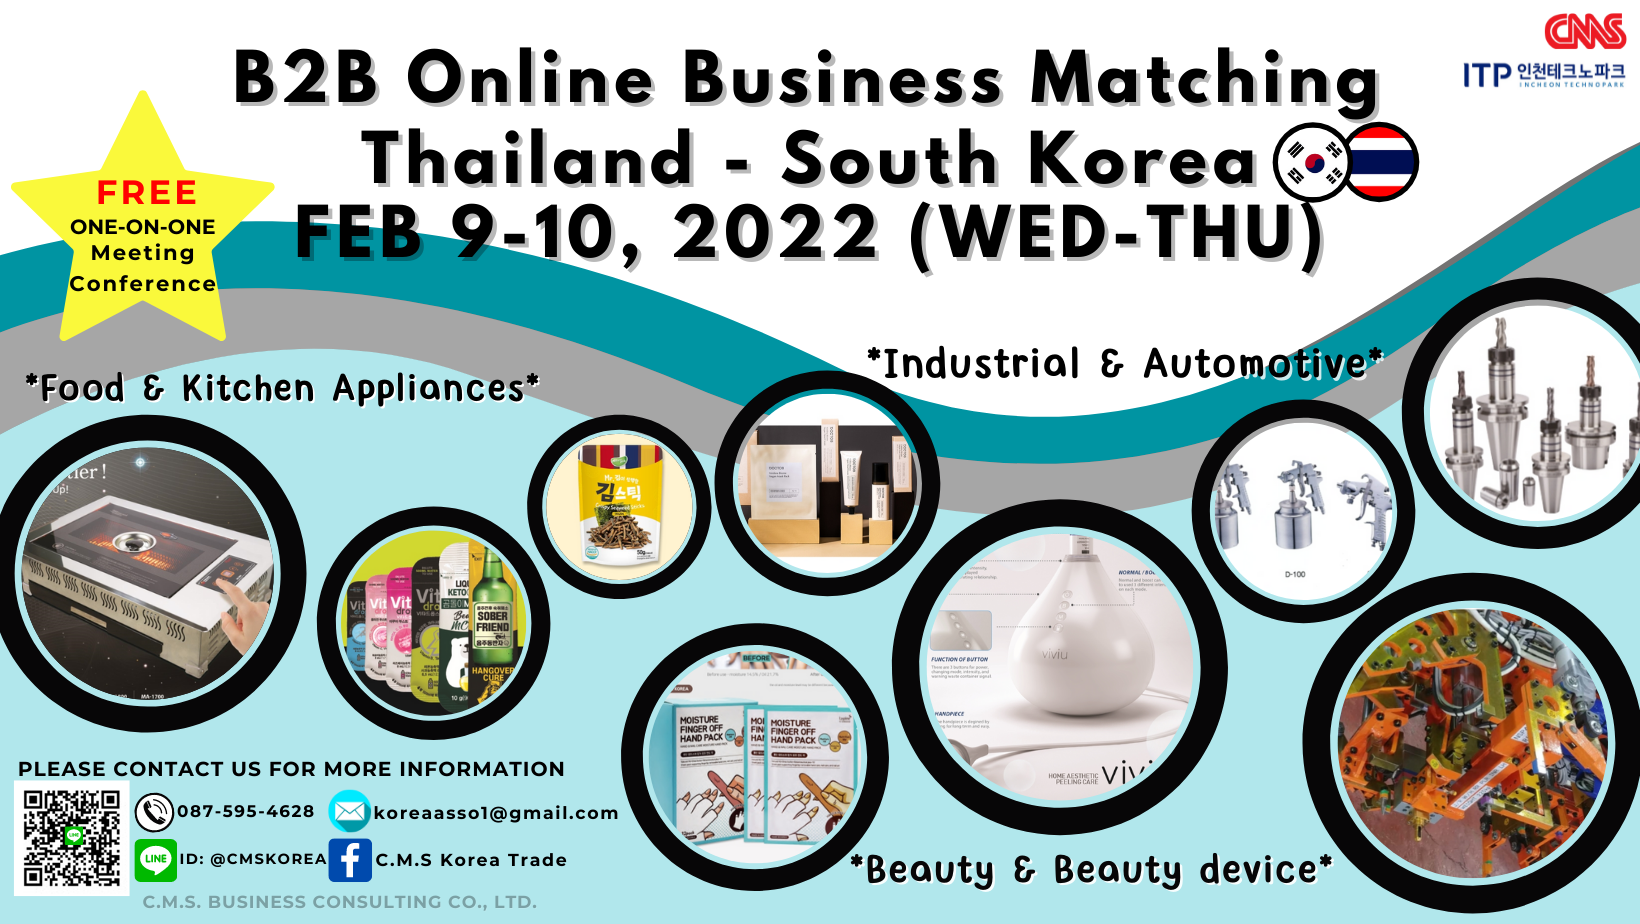 C.M.S. Korea Trade จัด "B2B Online Business Matching 2022" จับคู่เจรจาธุรกิจไทย - เกาหลีใต้ เน้นสินค้าอุตสาหกรรมรถยนต์ อาหาร บิวตี้ และ อุปกรณ์ความงาม